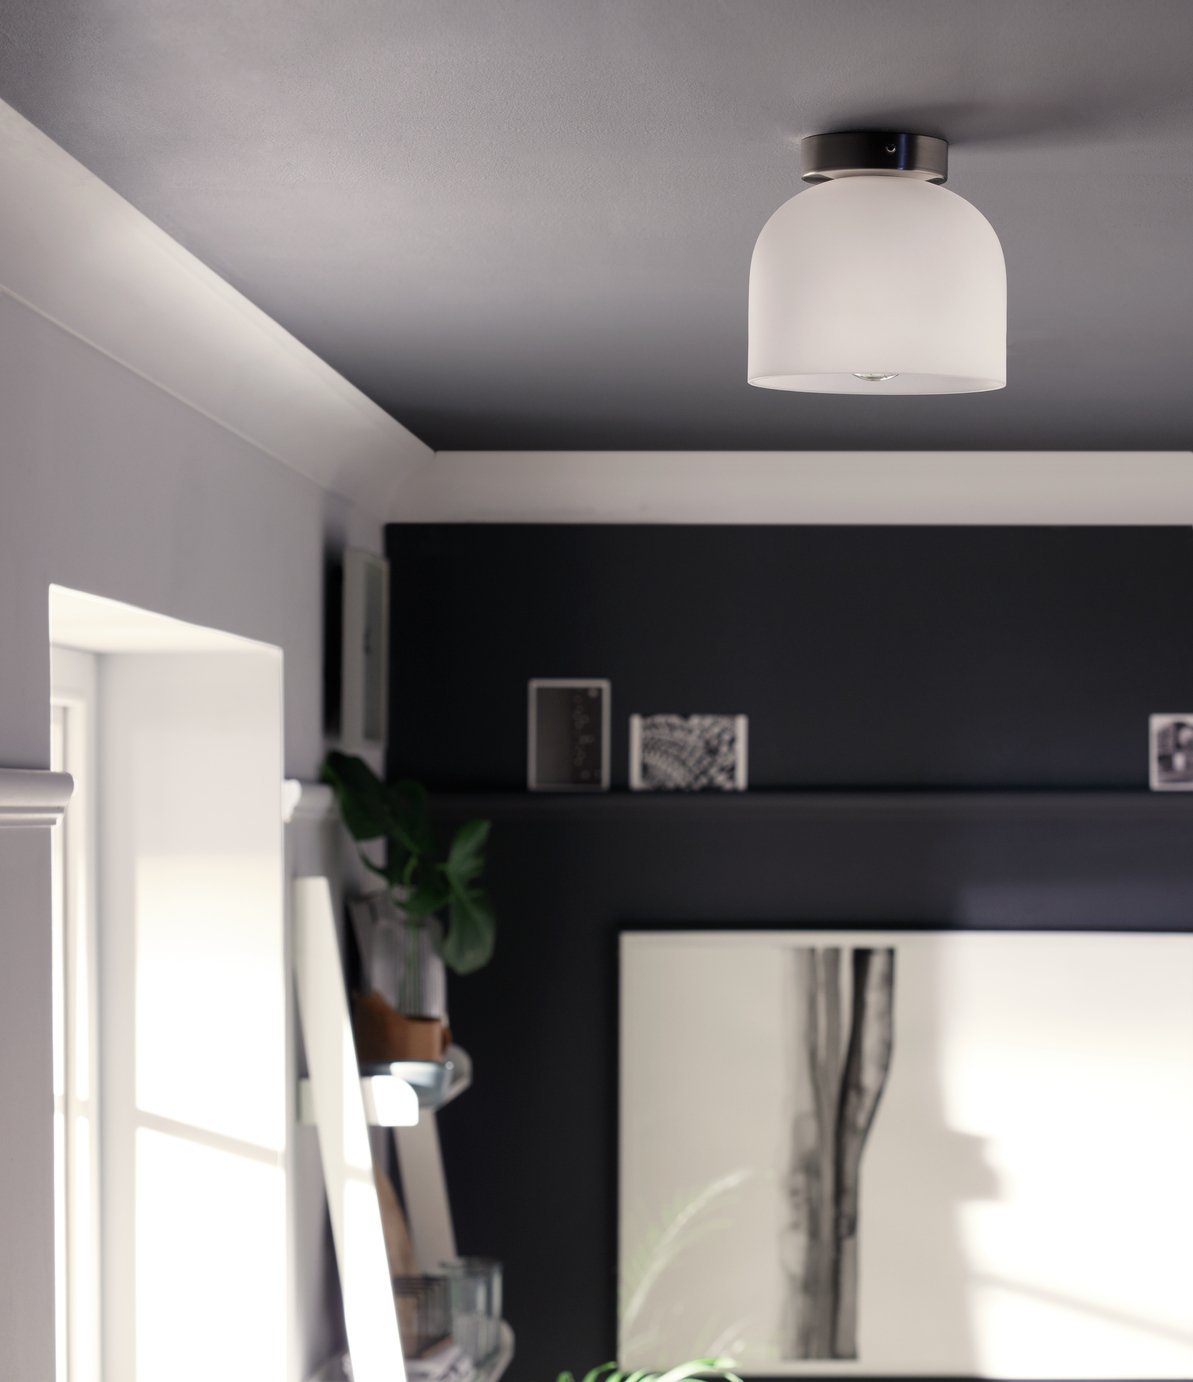 Argos Home Mirin Flush to Ceiling Light - Chrome